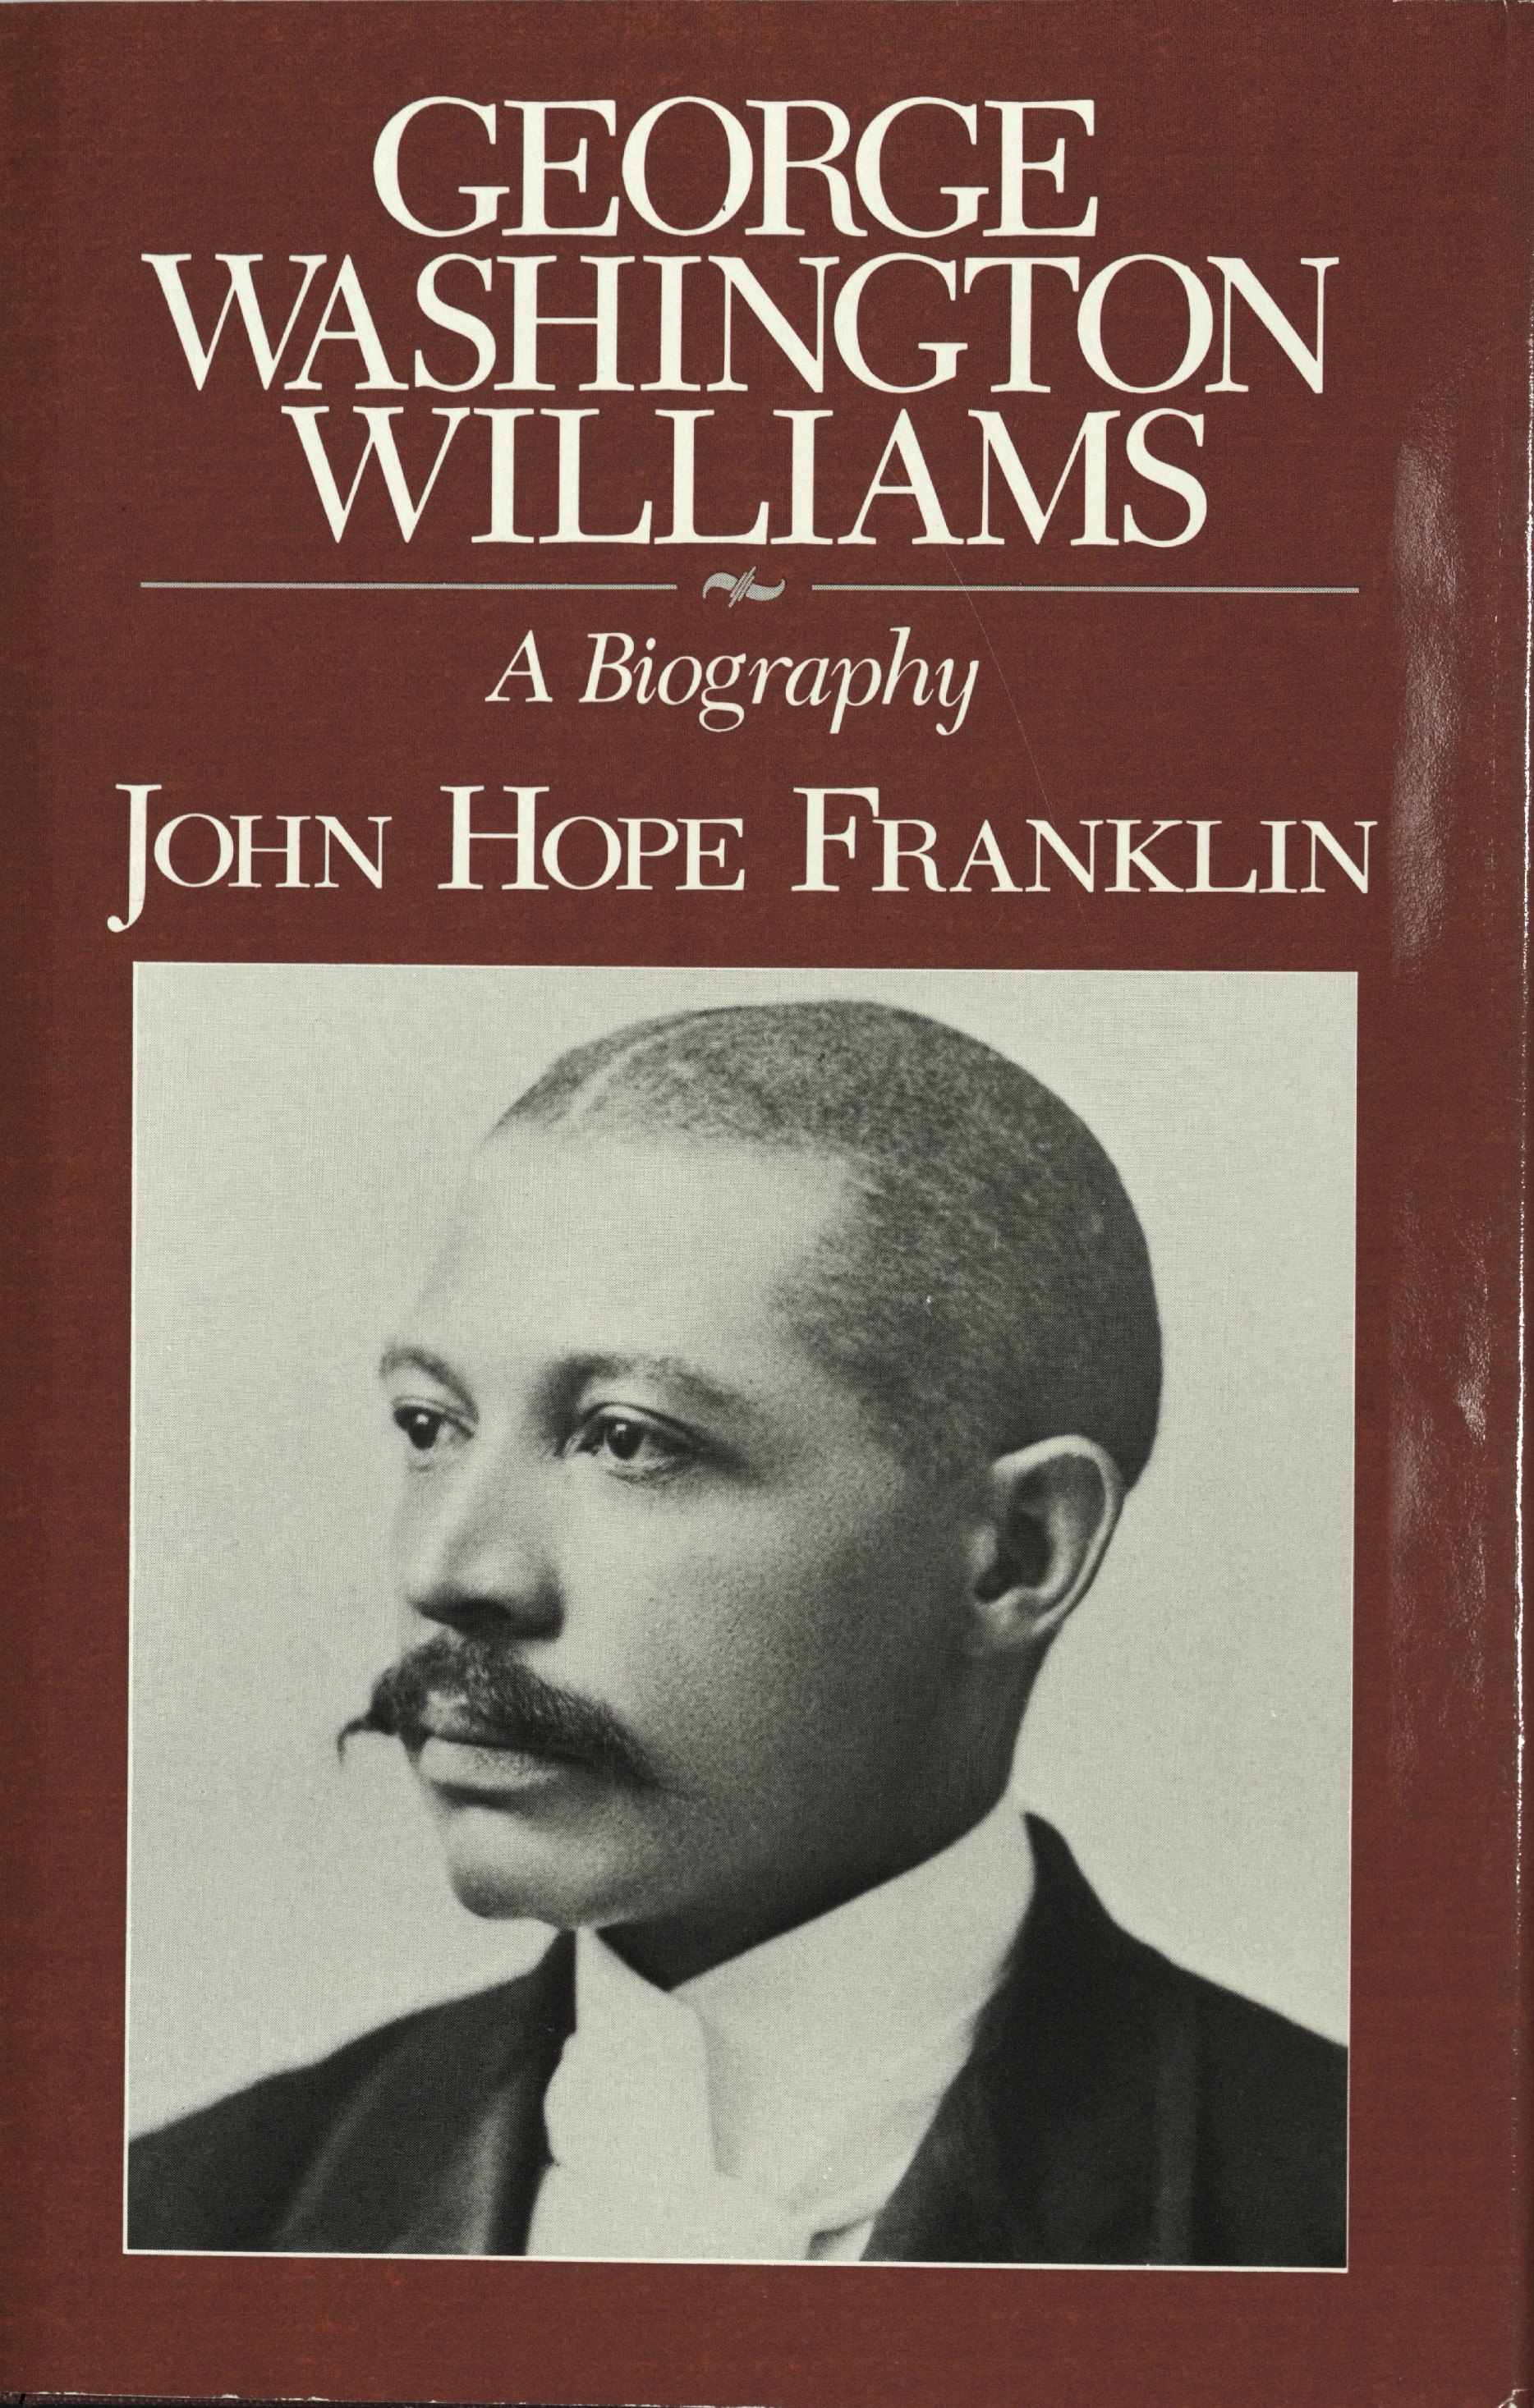 George Washington Williams: A Biography by John Hope Franklin, 1985